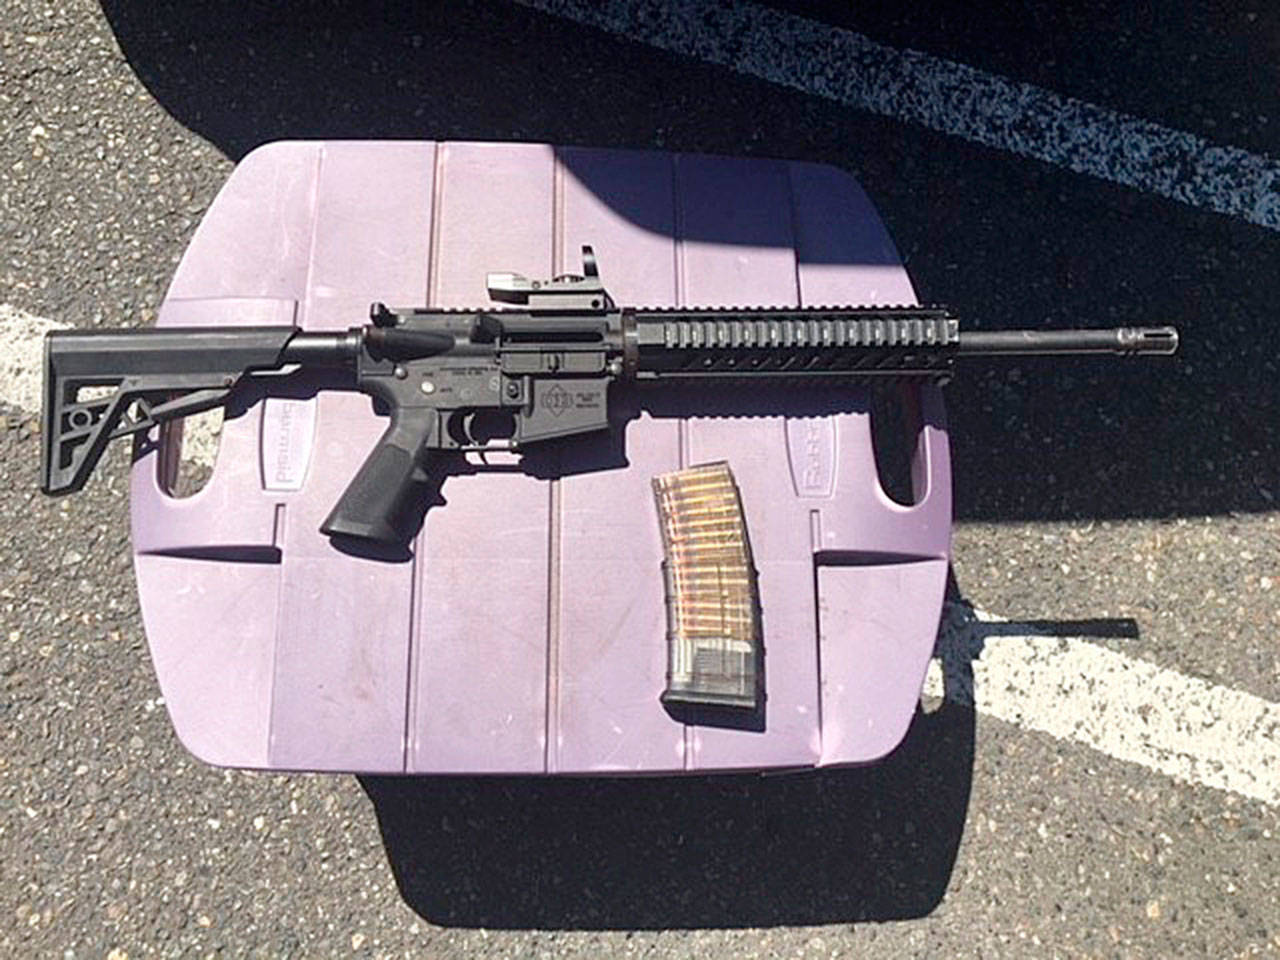 AG Ferguson’s bill to ban 3D-printed guns passes Legislature